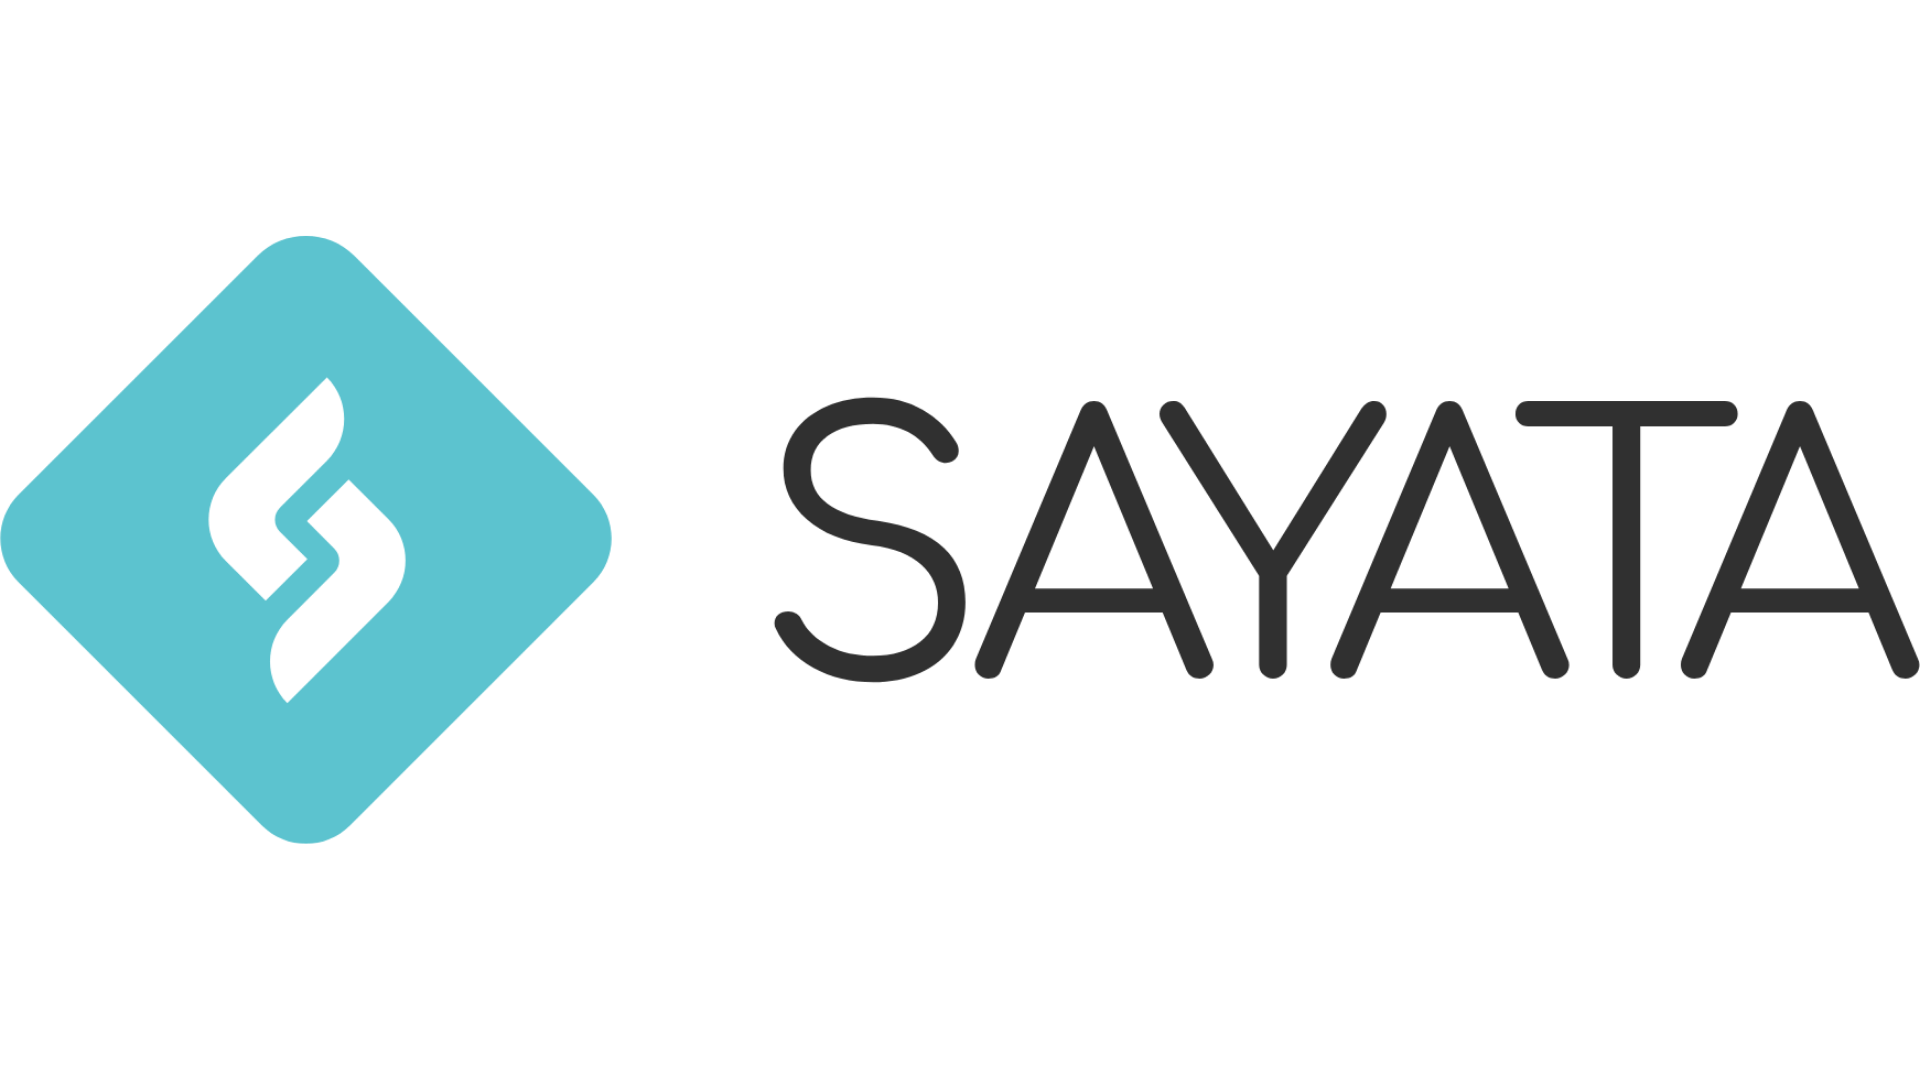 Sayata logo